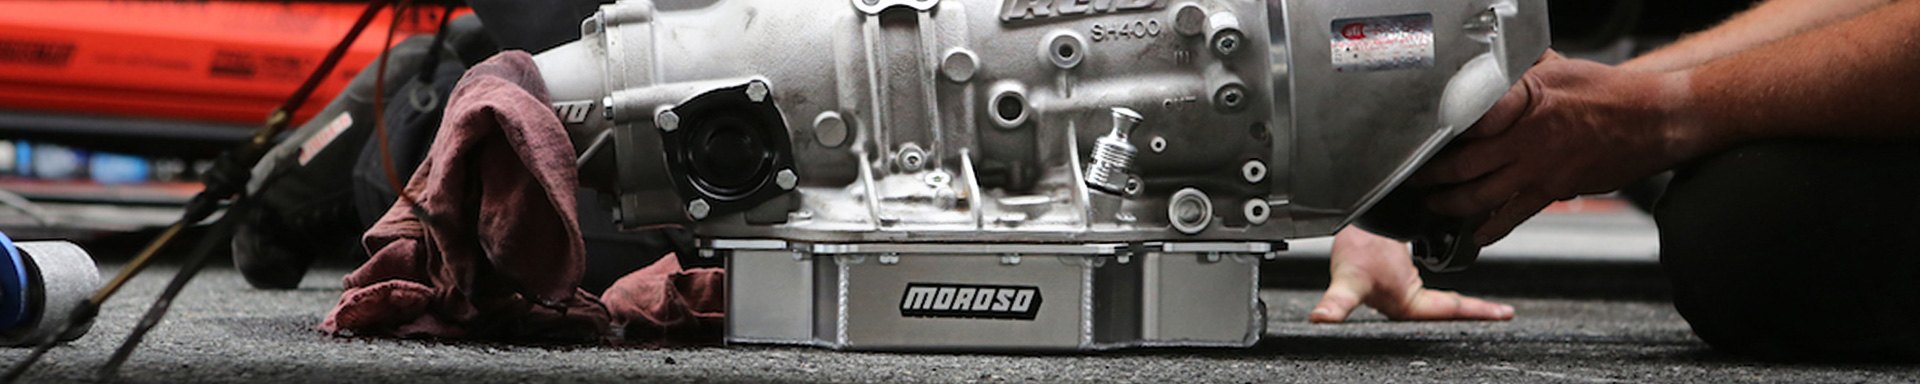 Moroso Engine